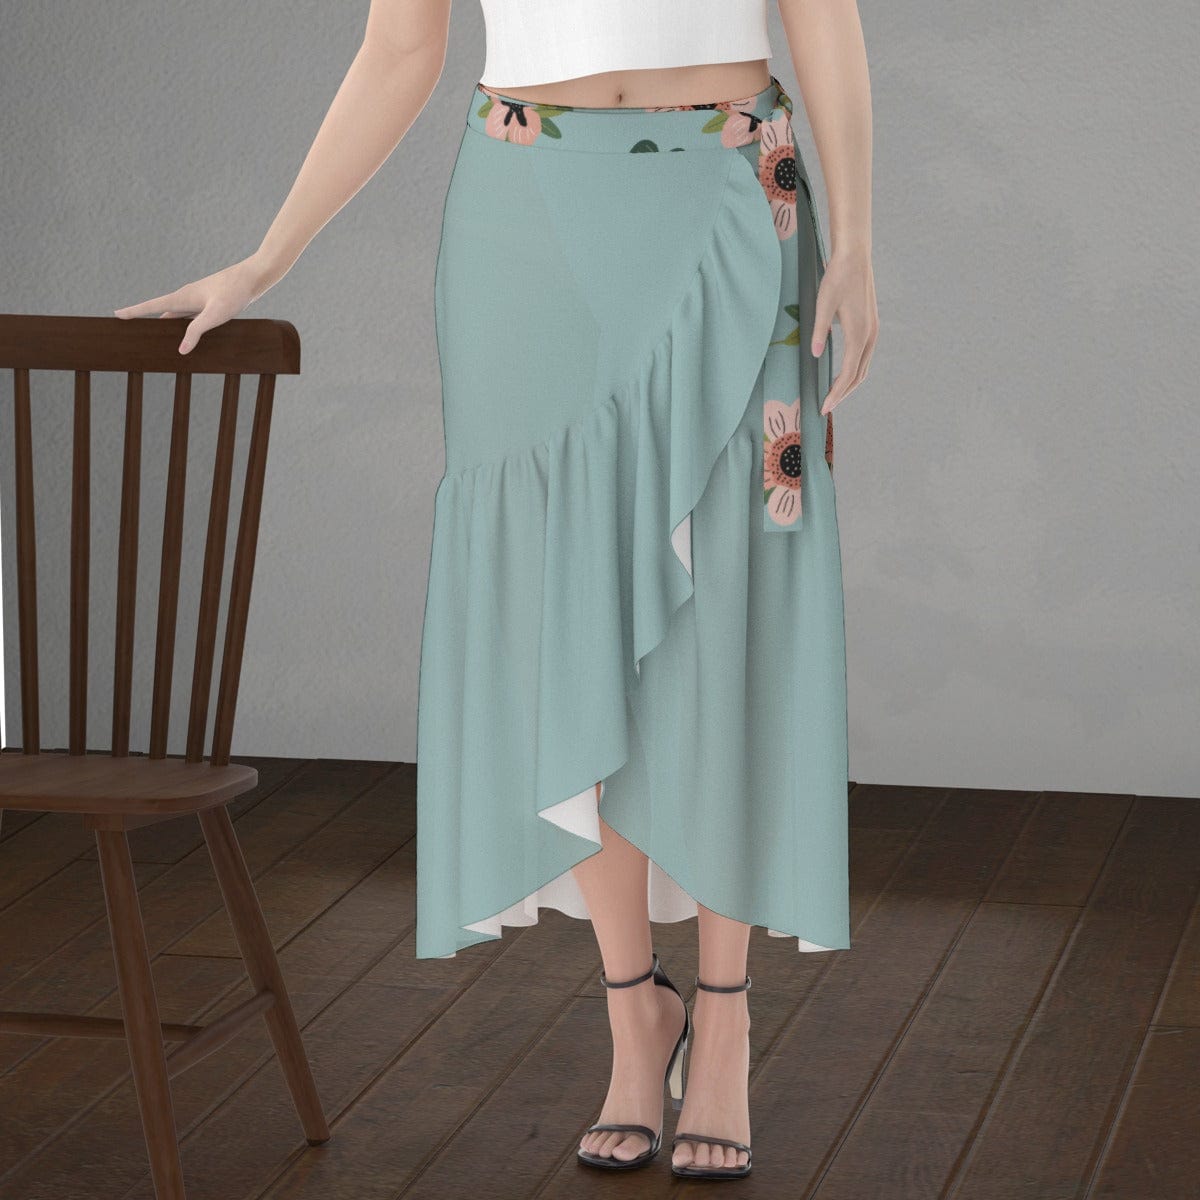 Yoycol Blue Green Coral Floral skirt -  Women's Wrap Skirt